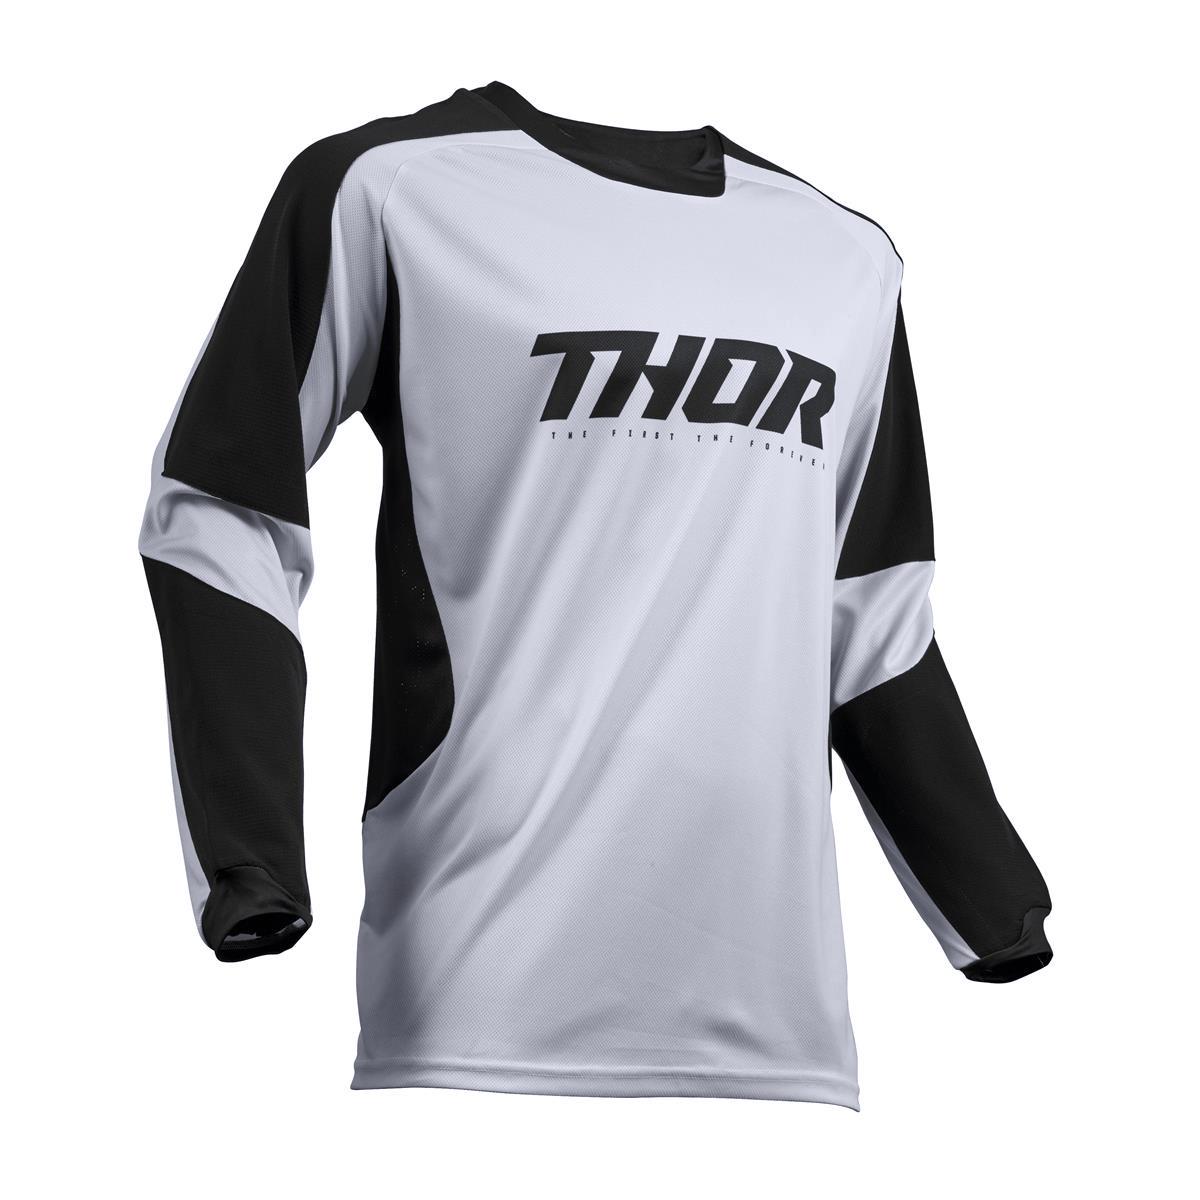 Thor Jersey Terrain Light Grey/Black